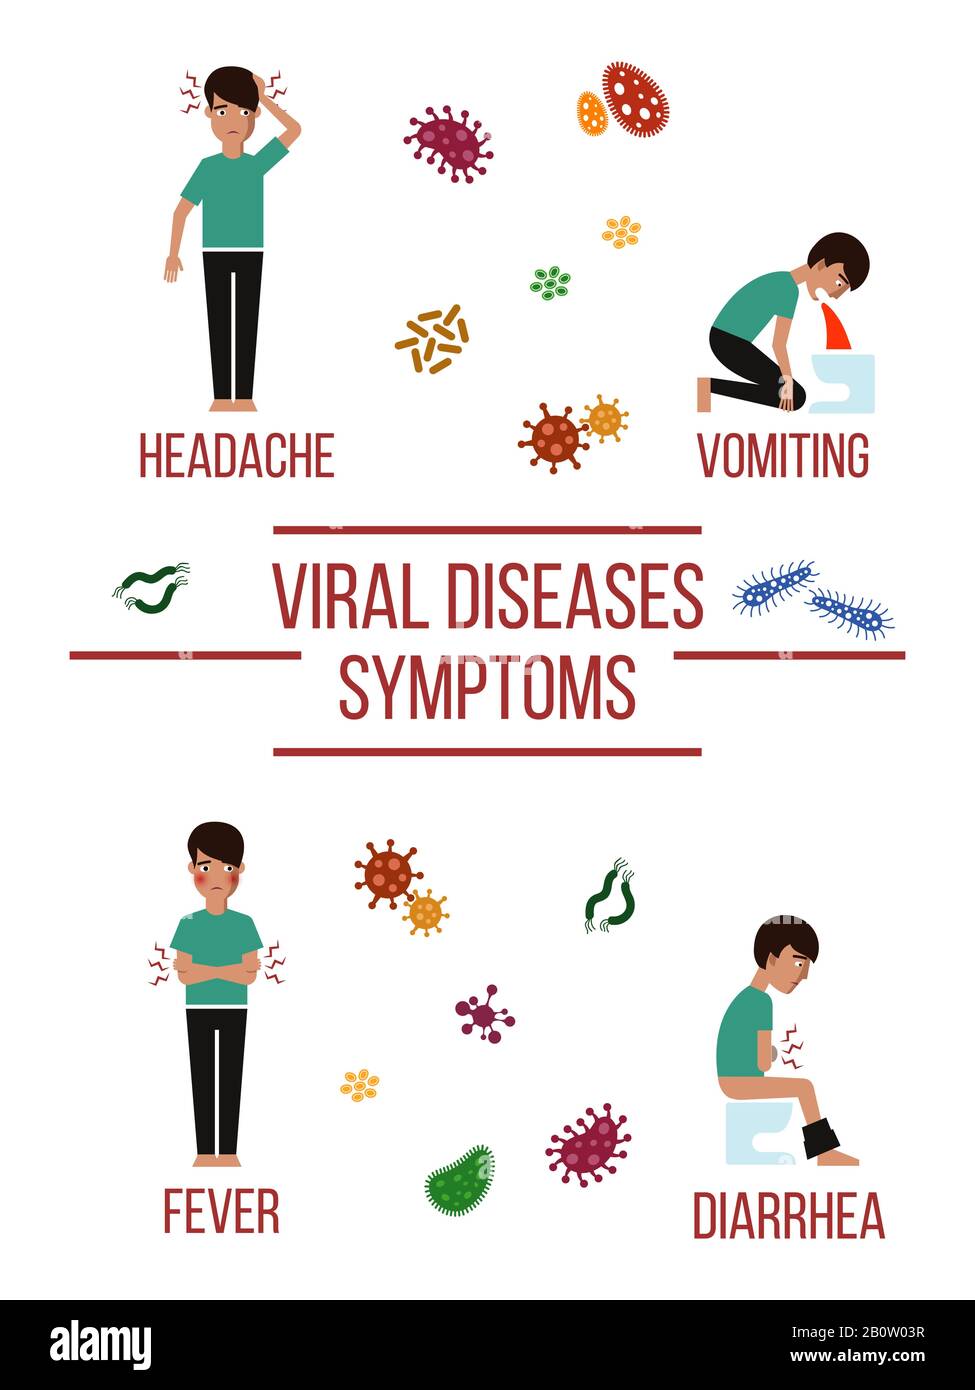 Viral diseases symptoms poster design. Treatment and virus, vector illustration Stock Vector